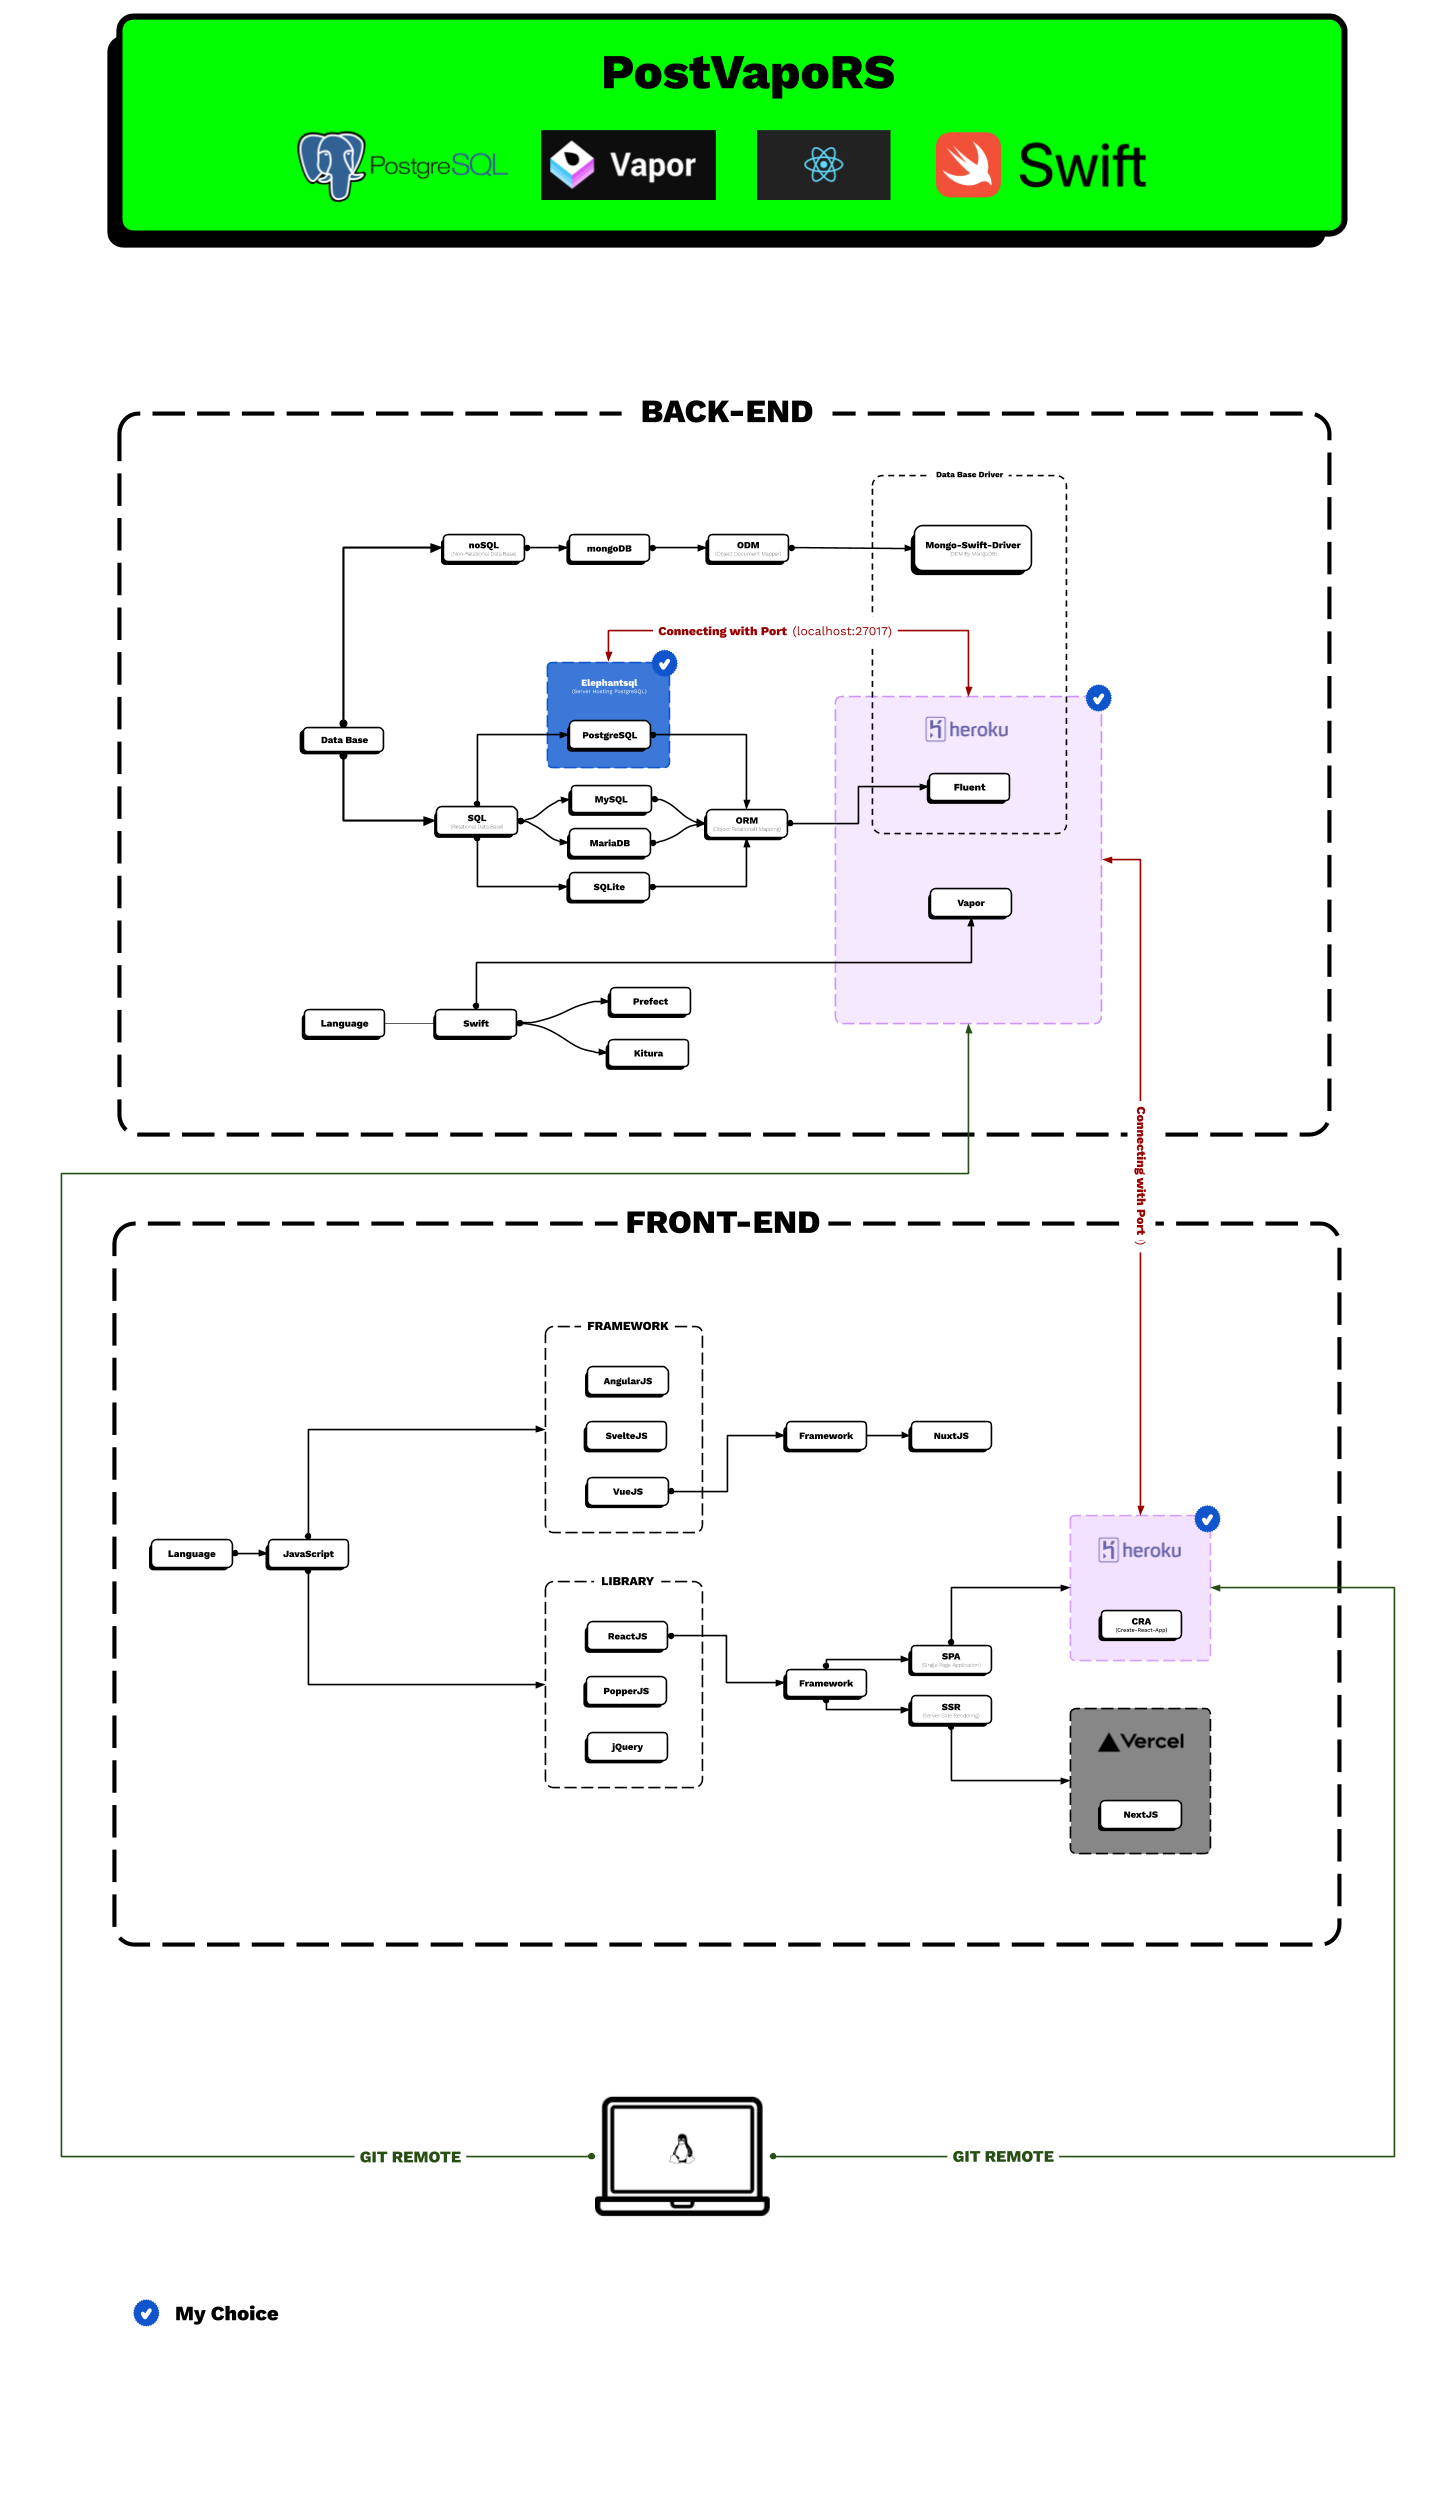 PostgreSQL-Vapor-ReactJS-Swift-Road-Map